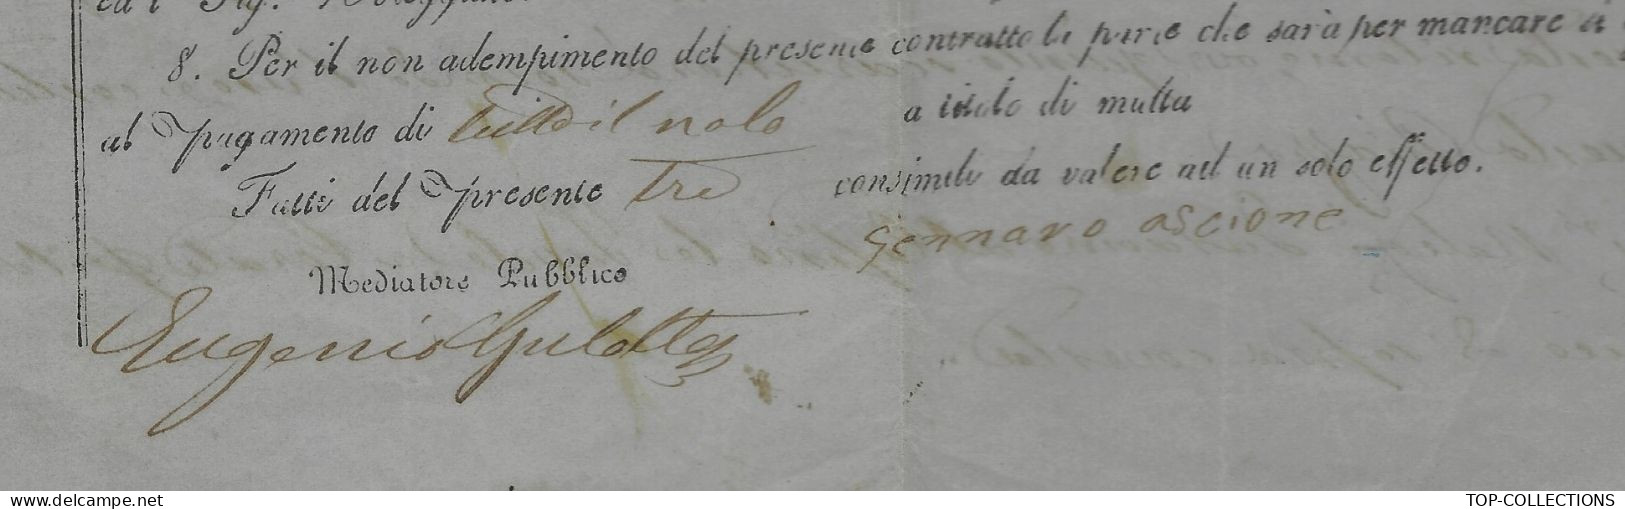 NAVIGATION ITALIE Parleme 1860  RARE CONTRAT D’ AFFRETEMENT CONTRATTO DI NOLEGGIO Pour Porto Palo Sicile - Italie